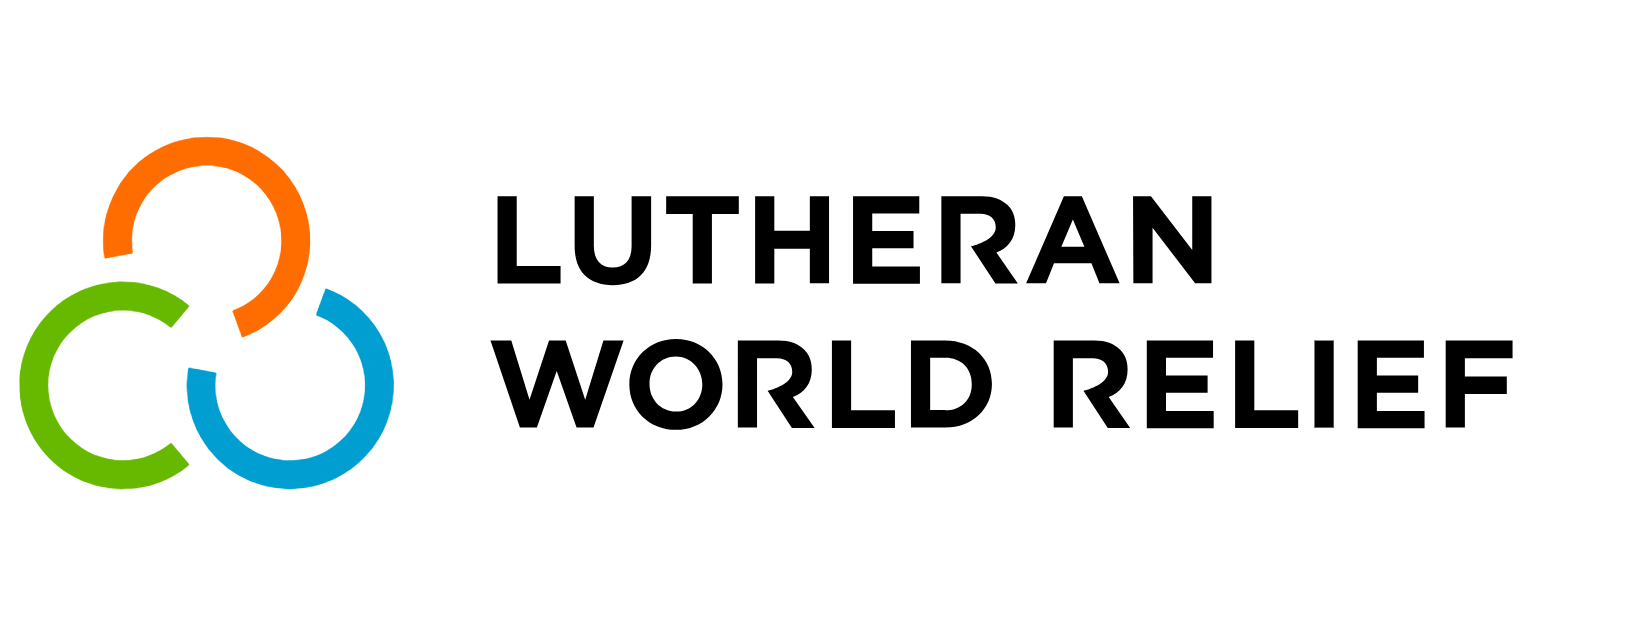 Lutheran World Relief